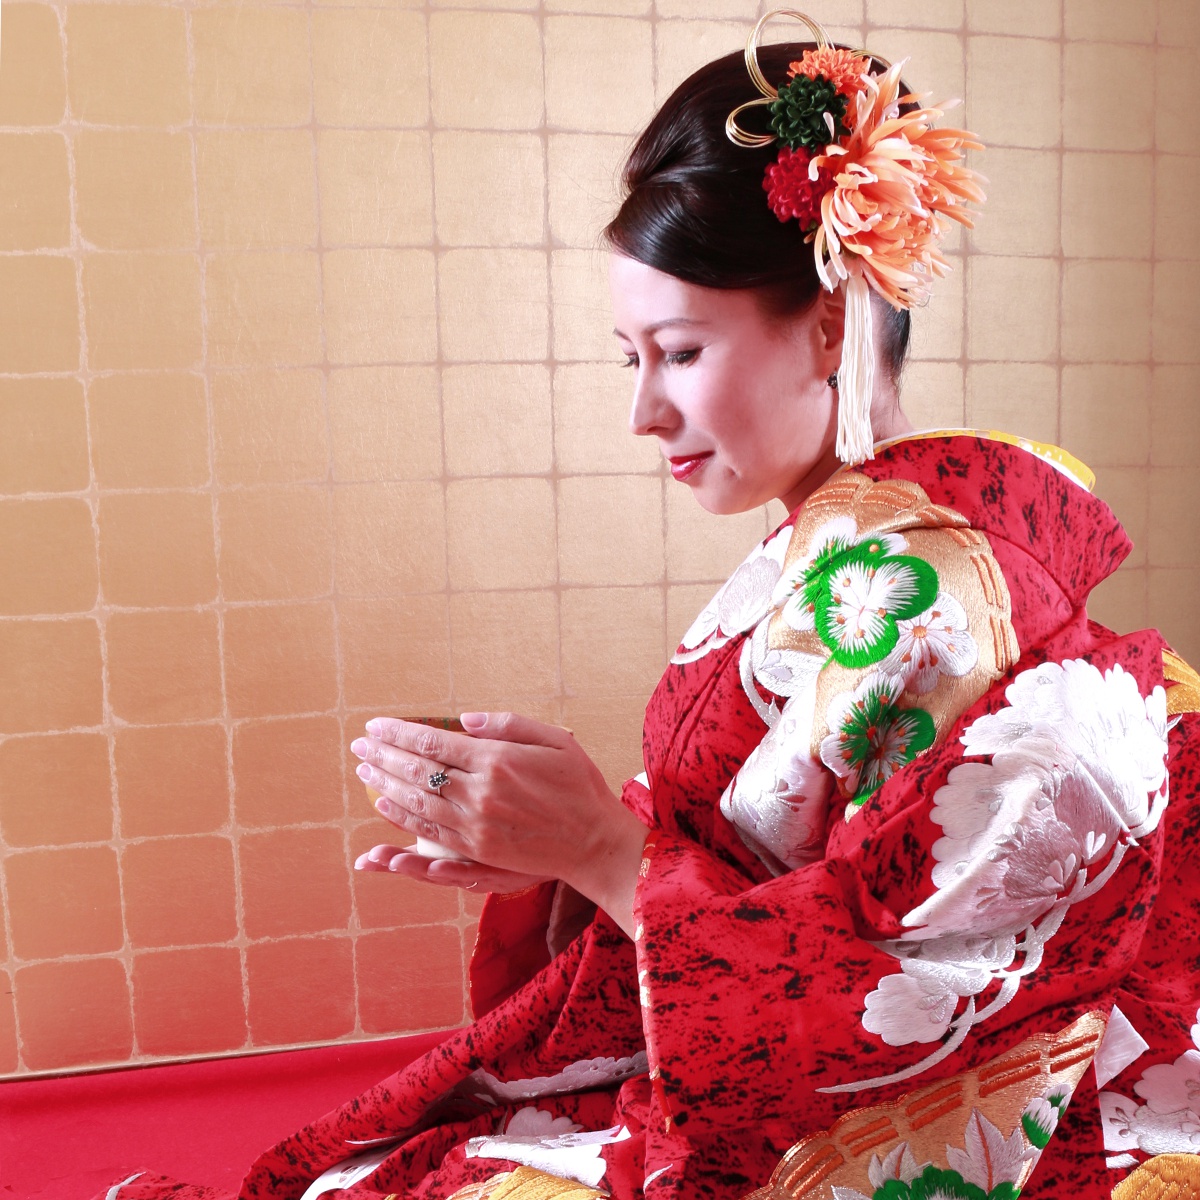 Kimono Rental Photo Experience Japan Awaits